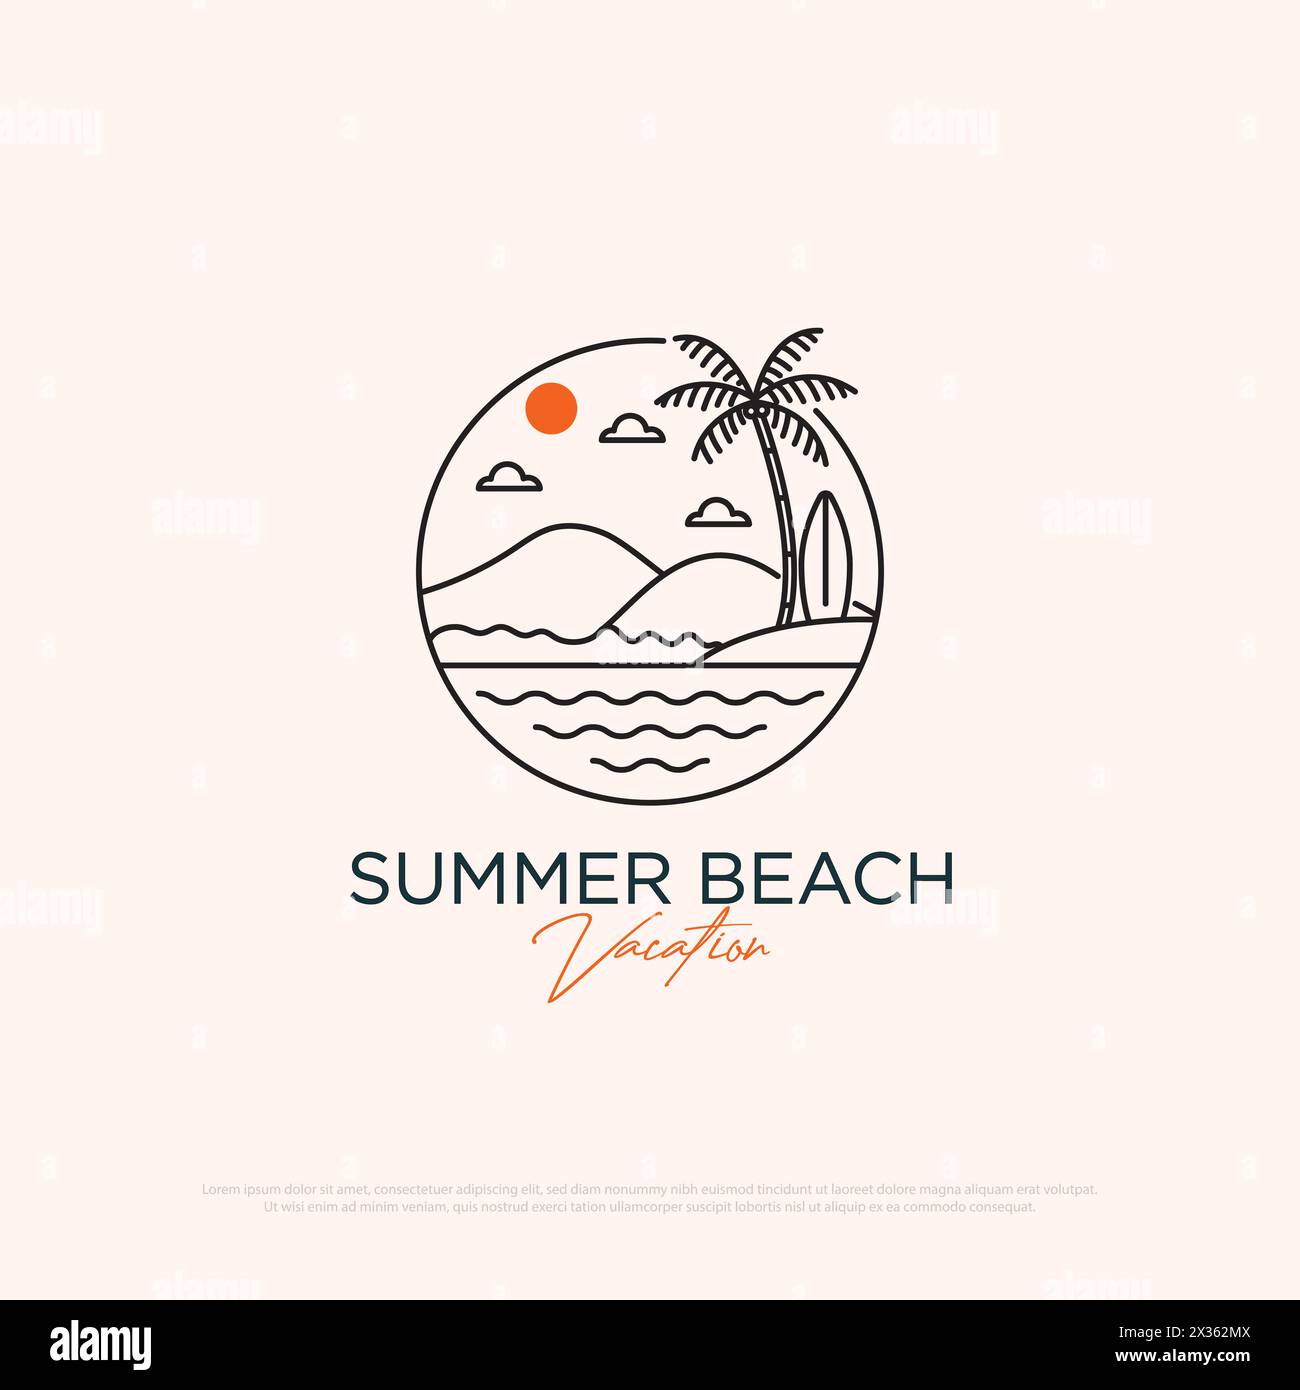 Summer vacation logo design with line art simple vector minimalist illustration template, travel agency logo designs Stock Vector